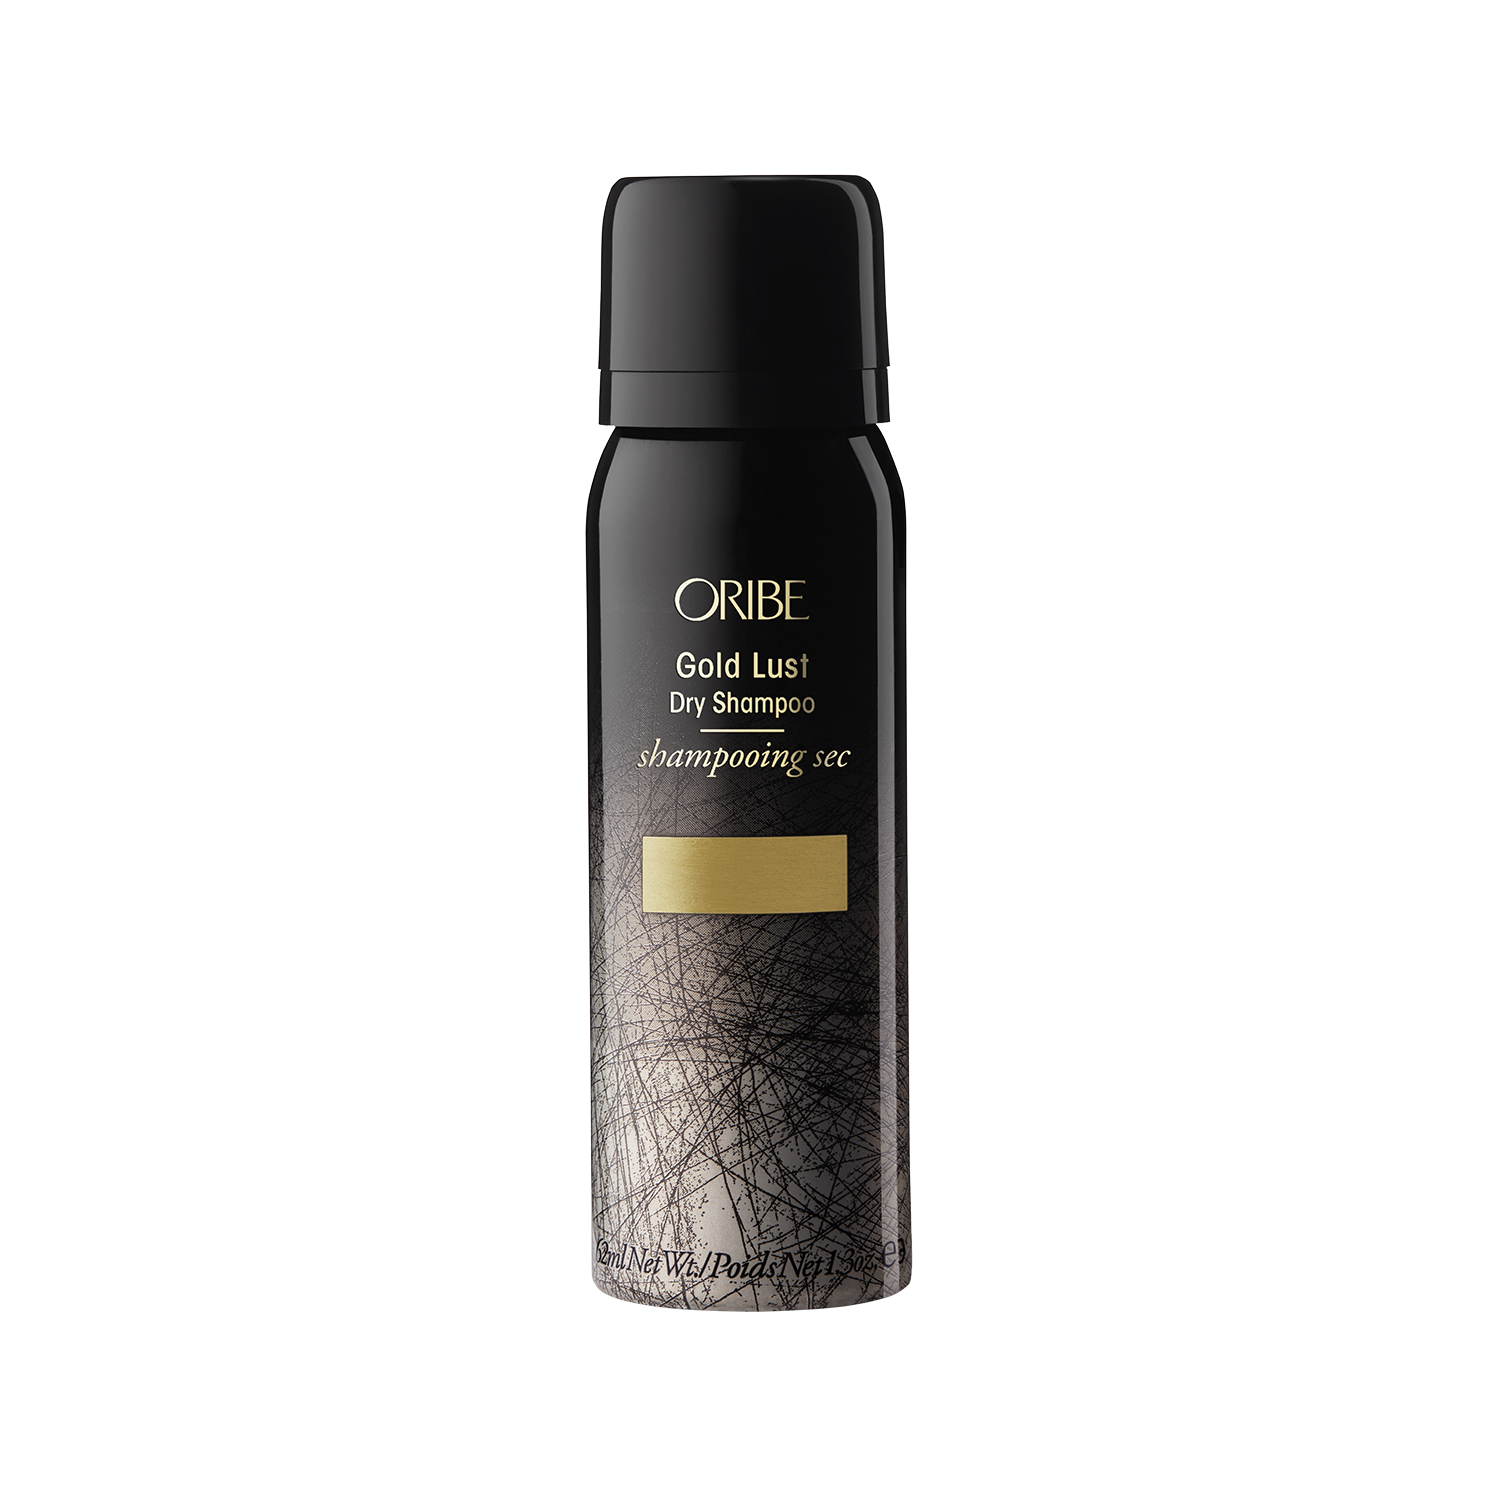 ORIBE - Gold Lust dry shampoo (Travel size)